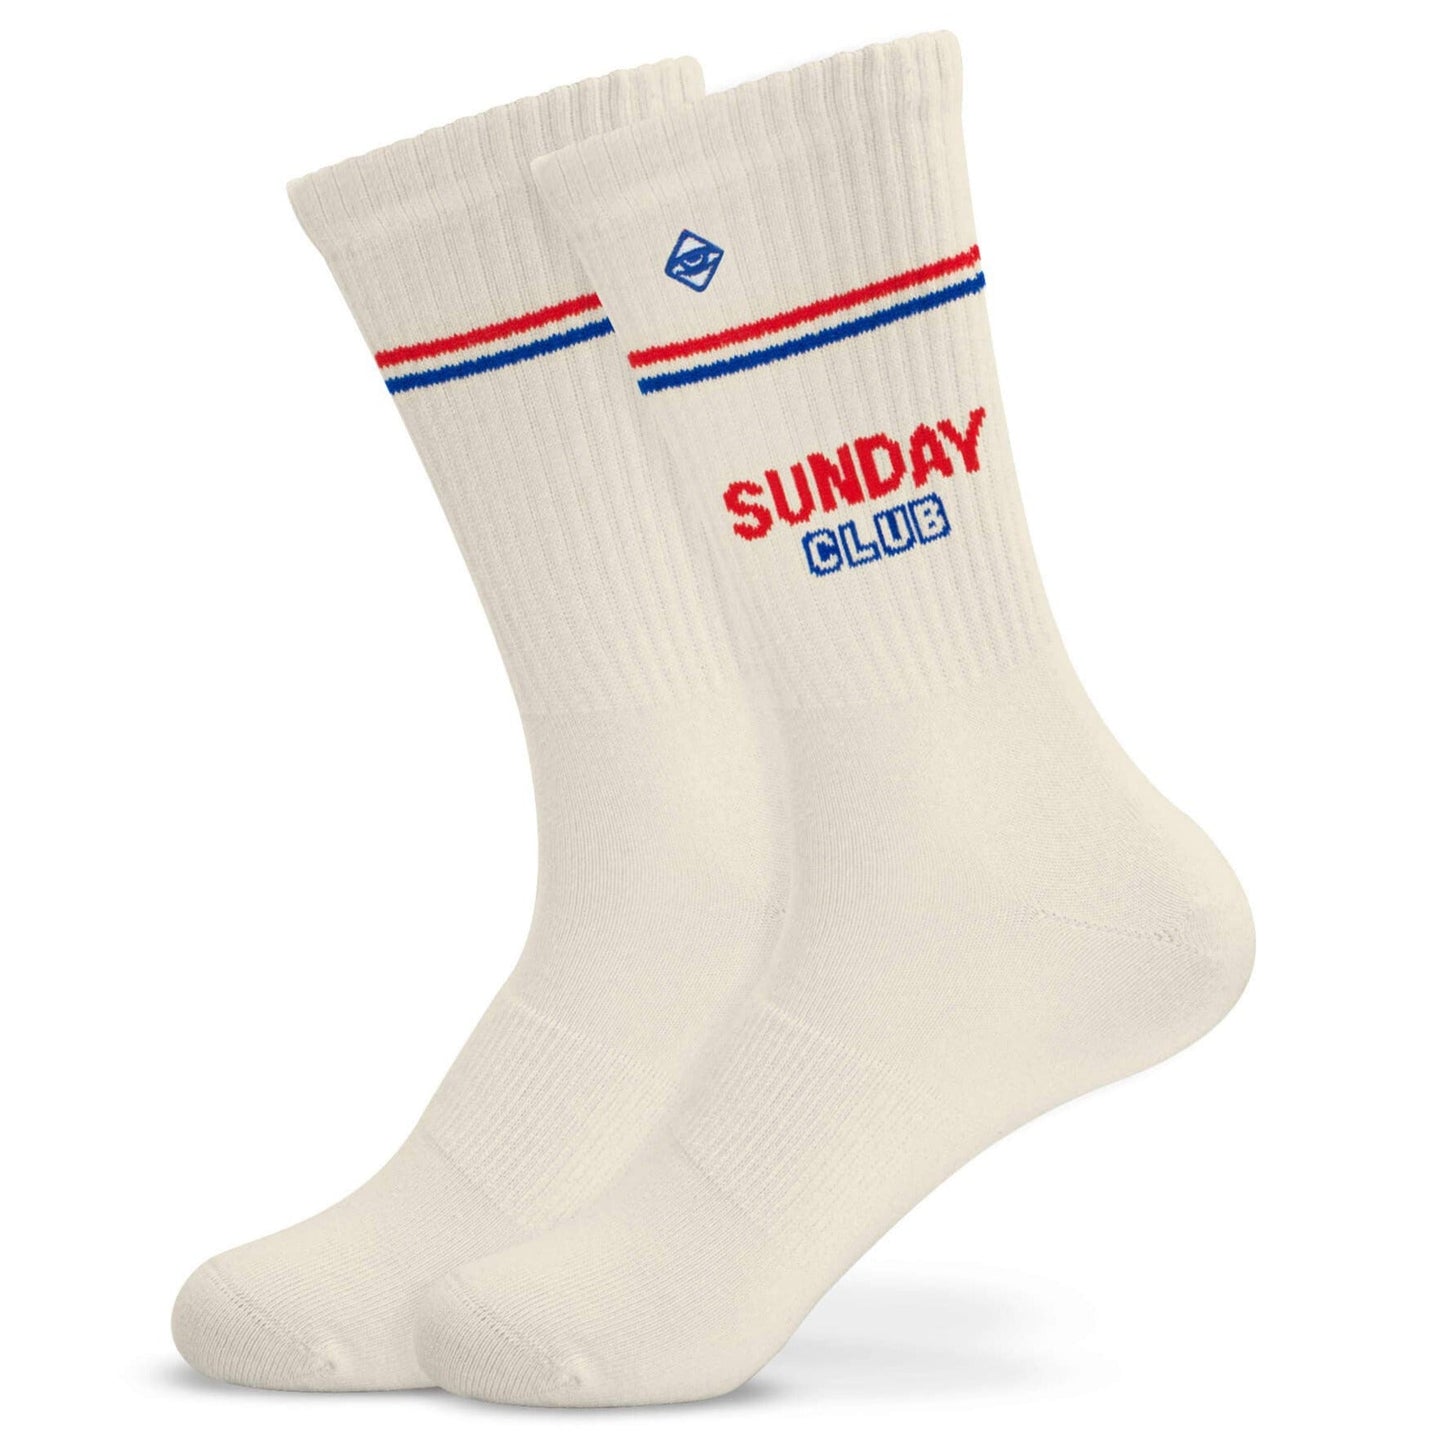 Sunday Club - Cotton Socks - J.Clay - Chicsox - 1230001-S#02#005